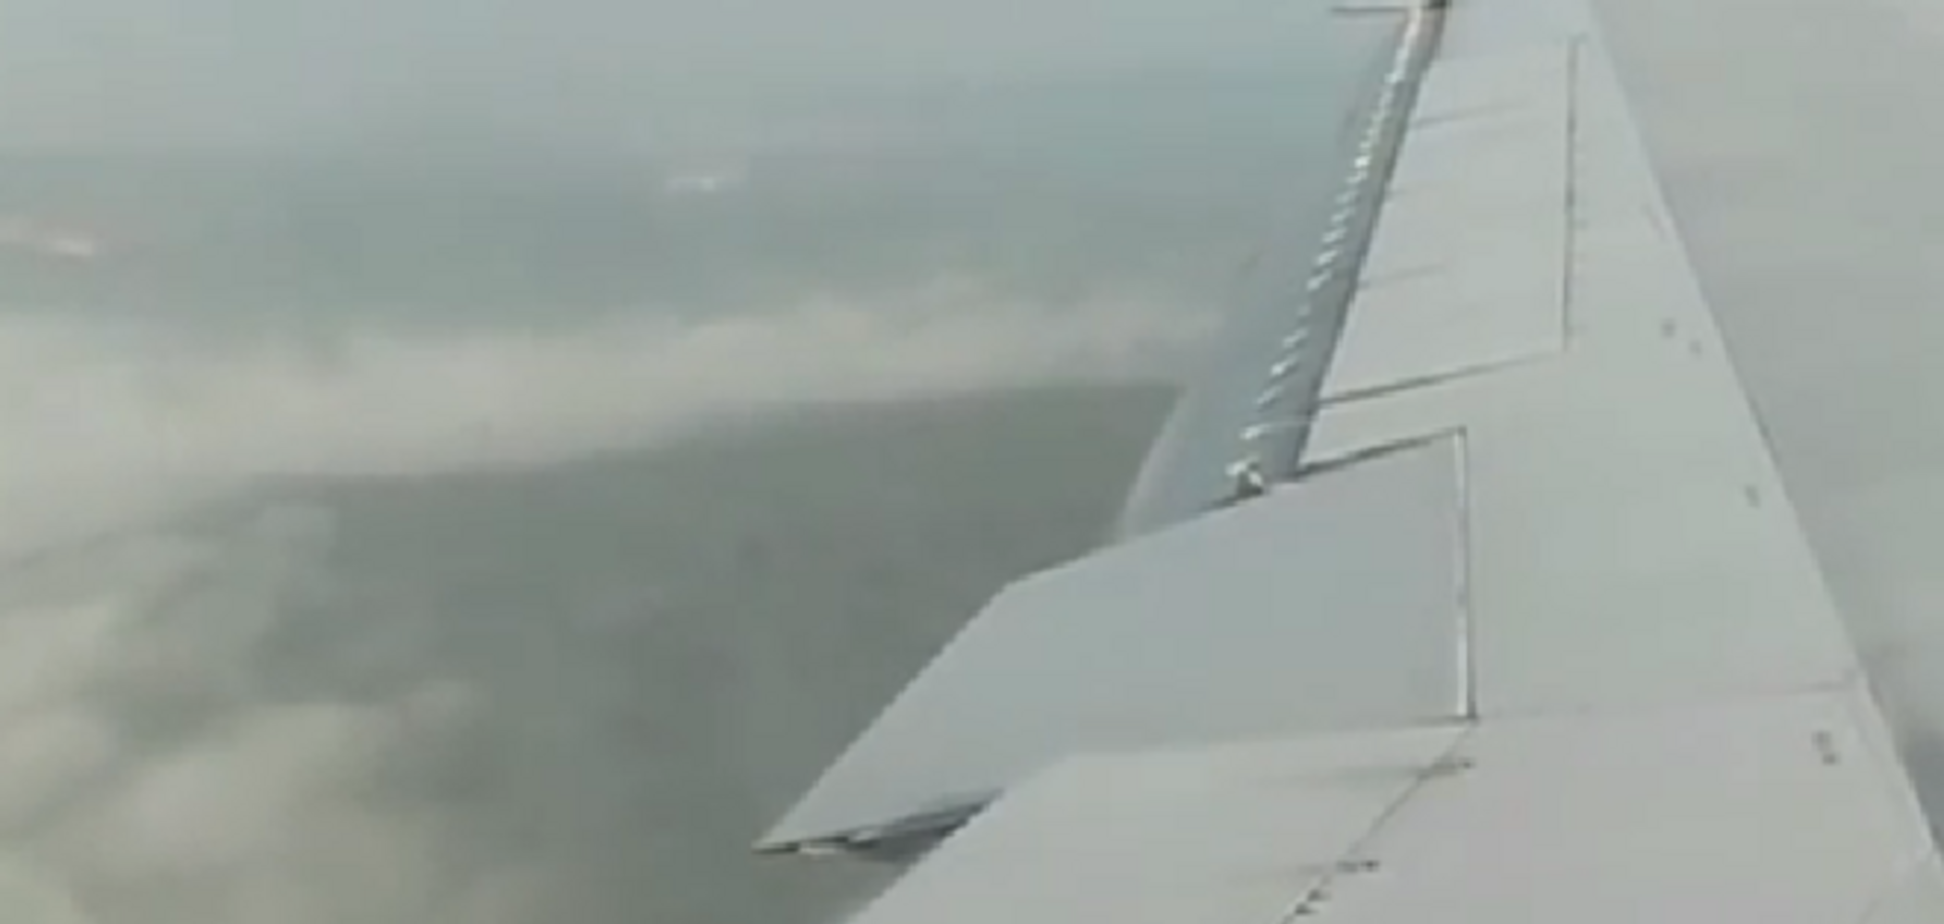 Над Австралией пассажиры самолета сняли на видео НЛО